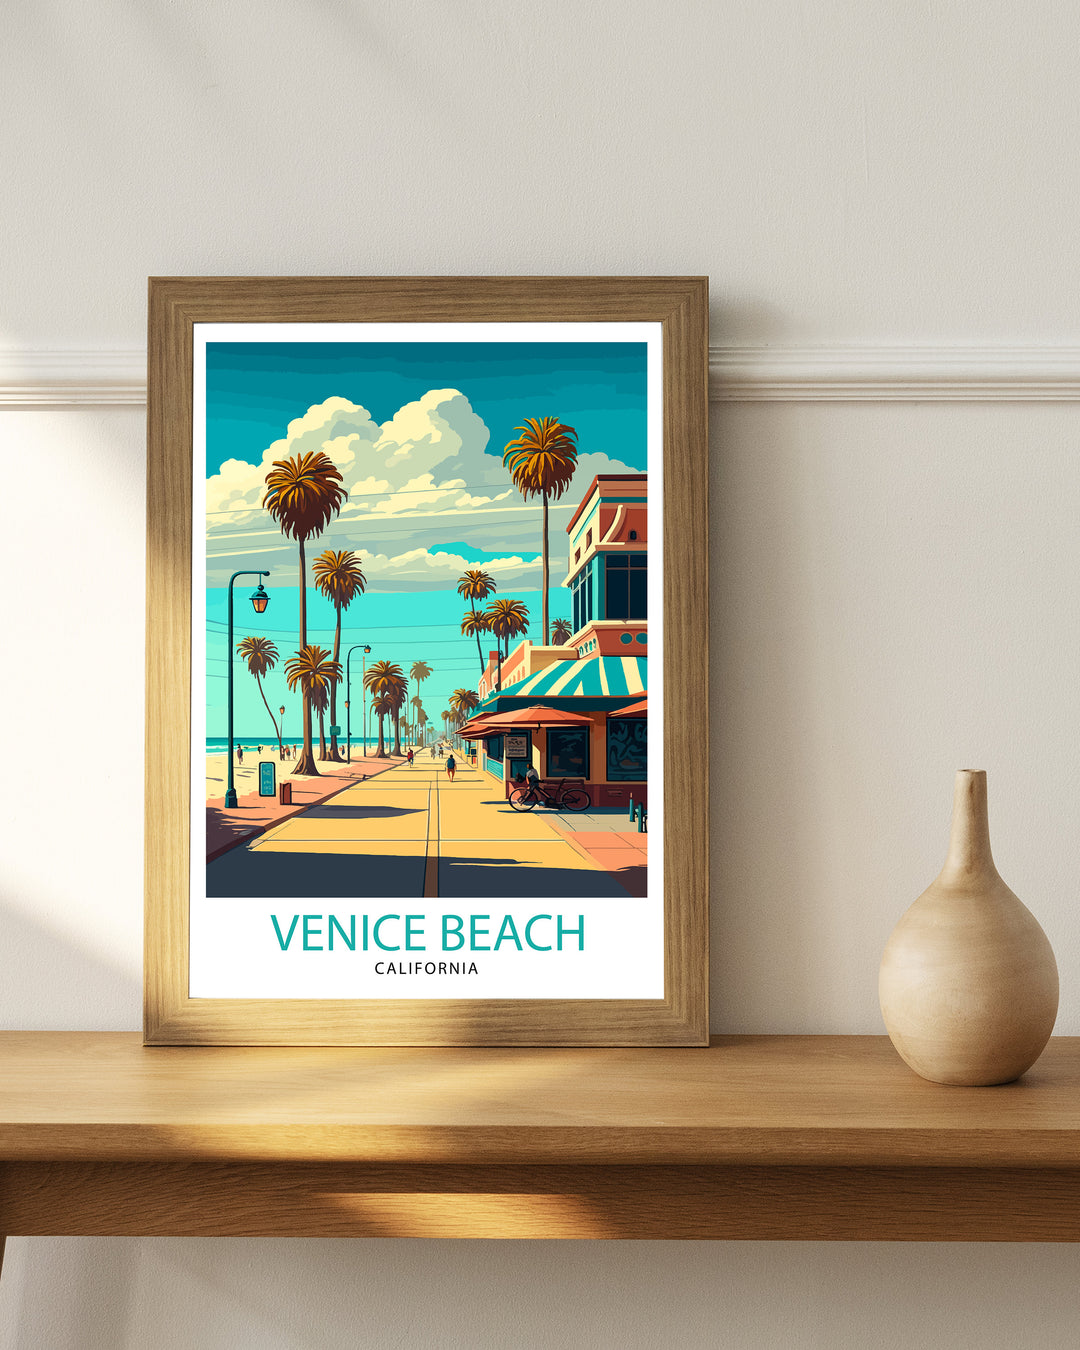 Venice Beach California Travel Poster Venice Beach Wall Art Venice Beach Home Decor Venice Beach Illustration Travel Poster Gift for Venice